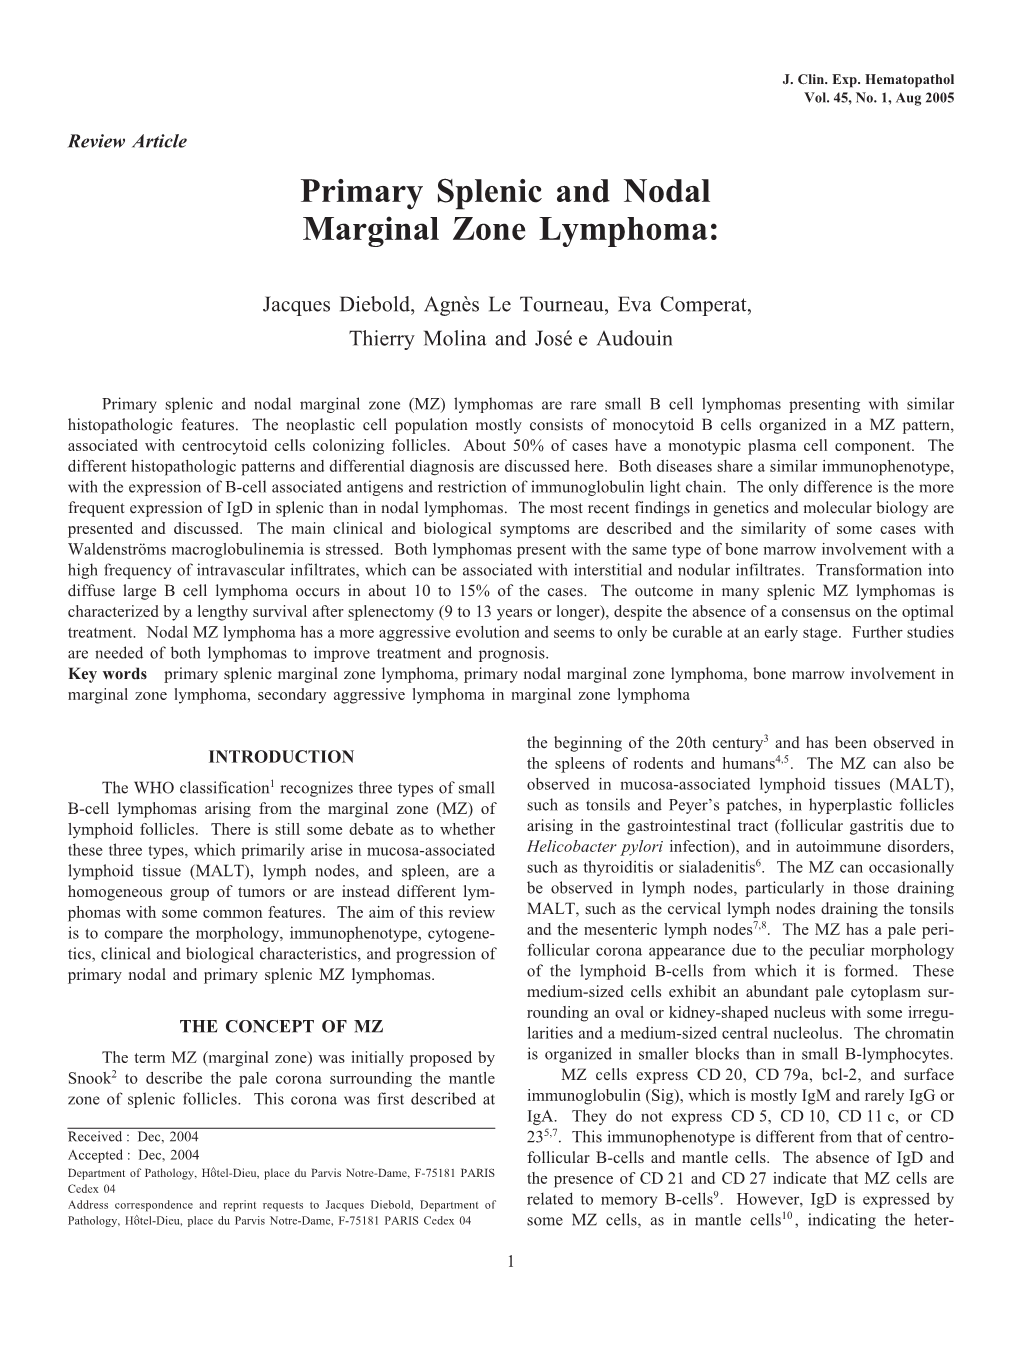 Primary Splenic and Nodal Marginal Zone Lymphoma